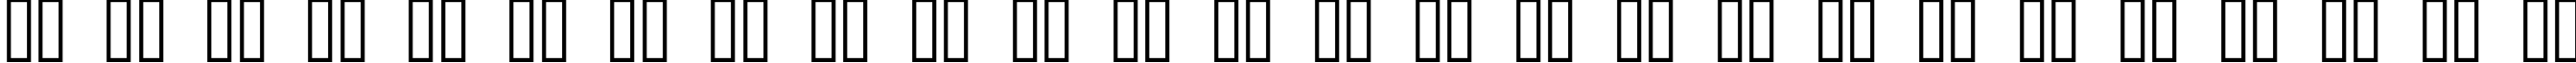 Пример написания английского алфавита шрифтом Latha